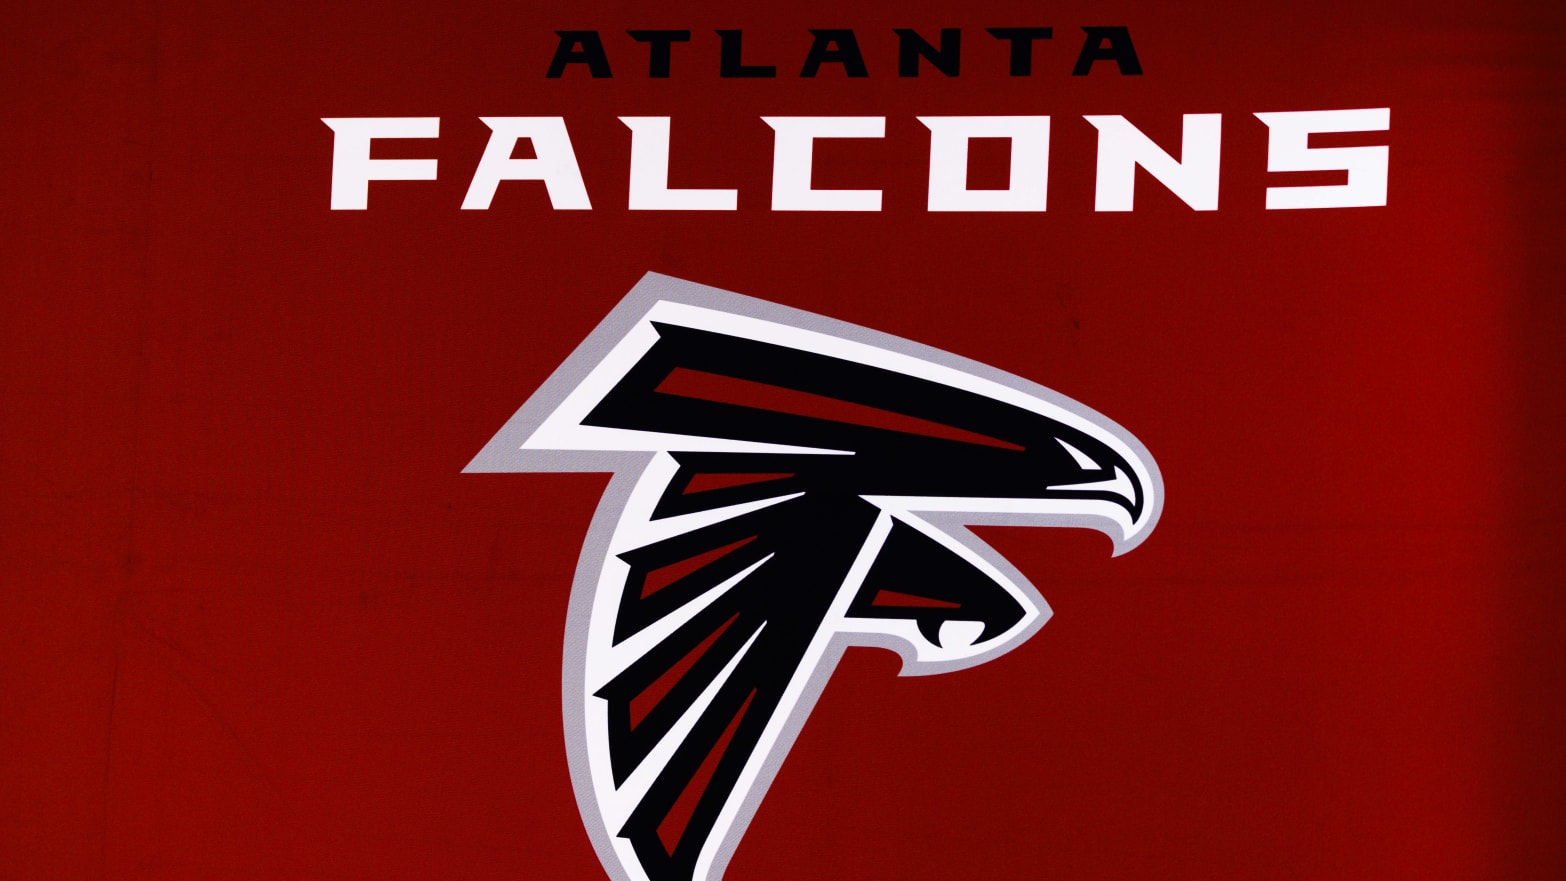 The Atlanta Falcons logo